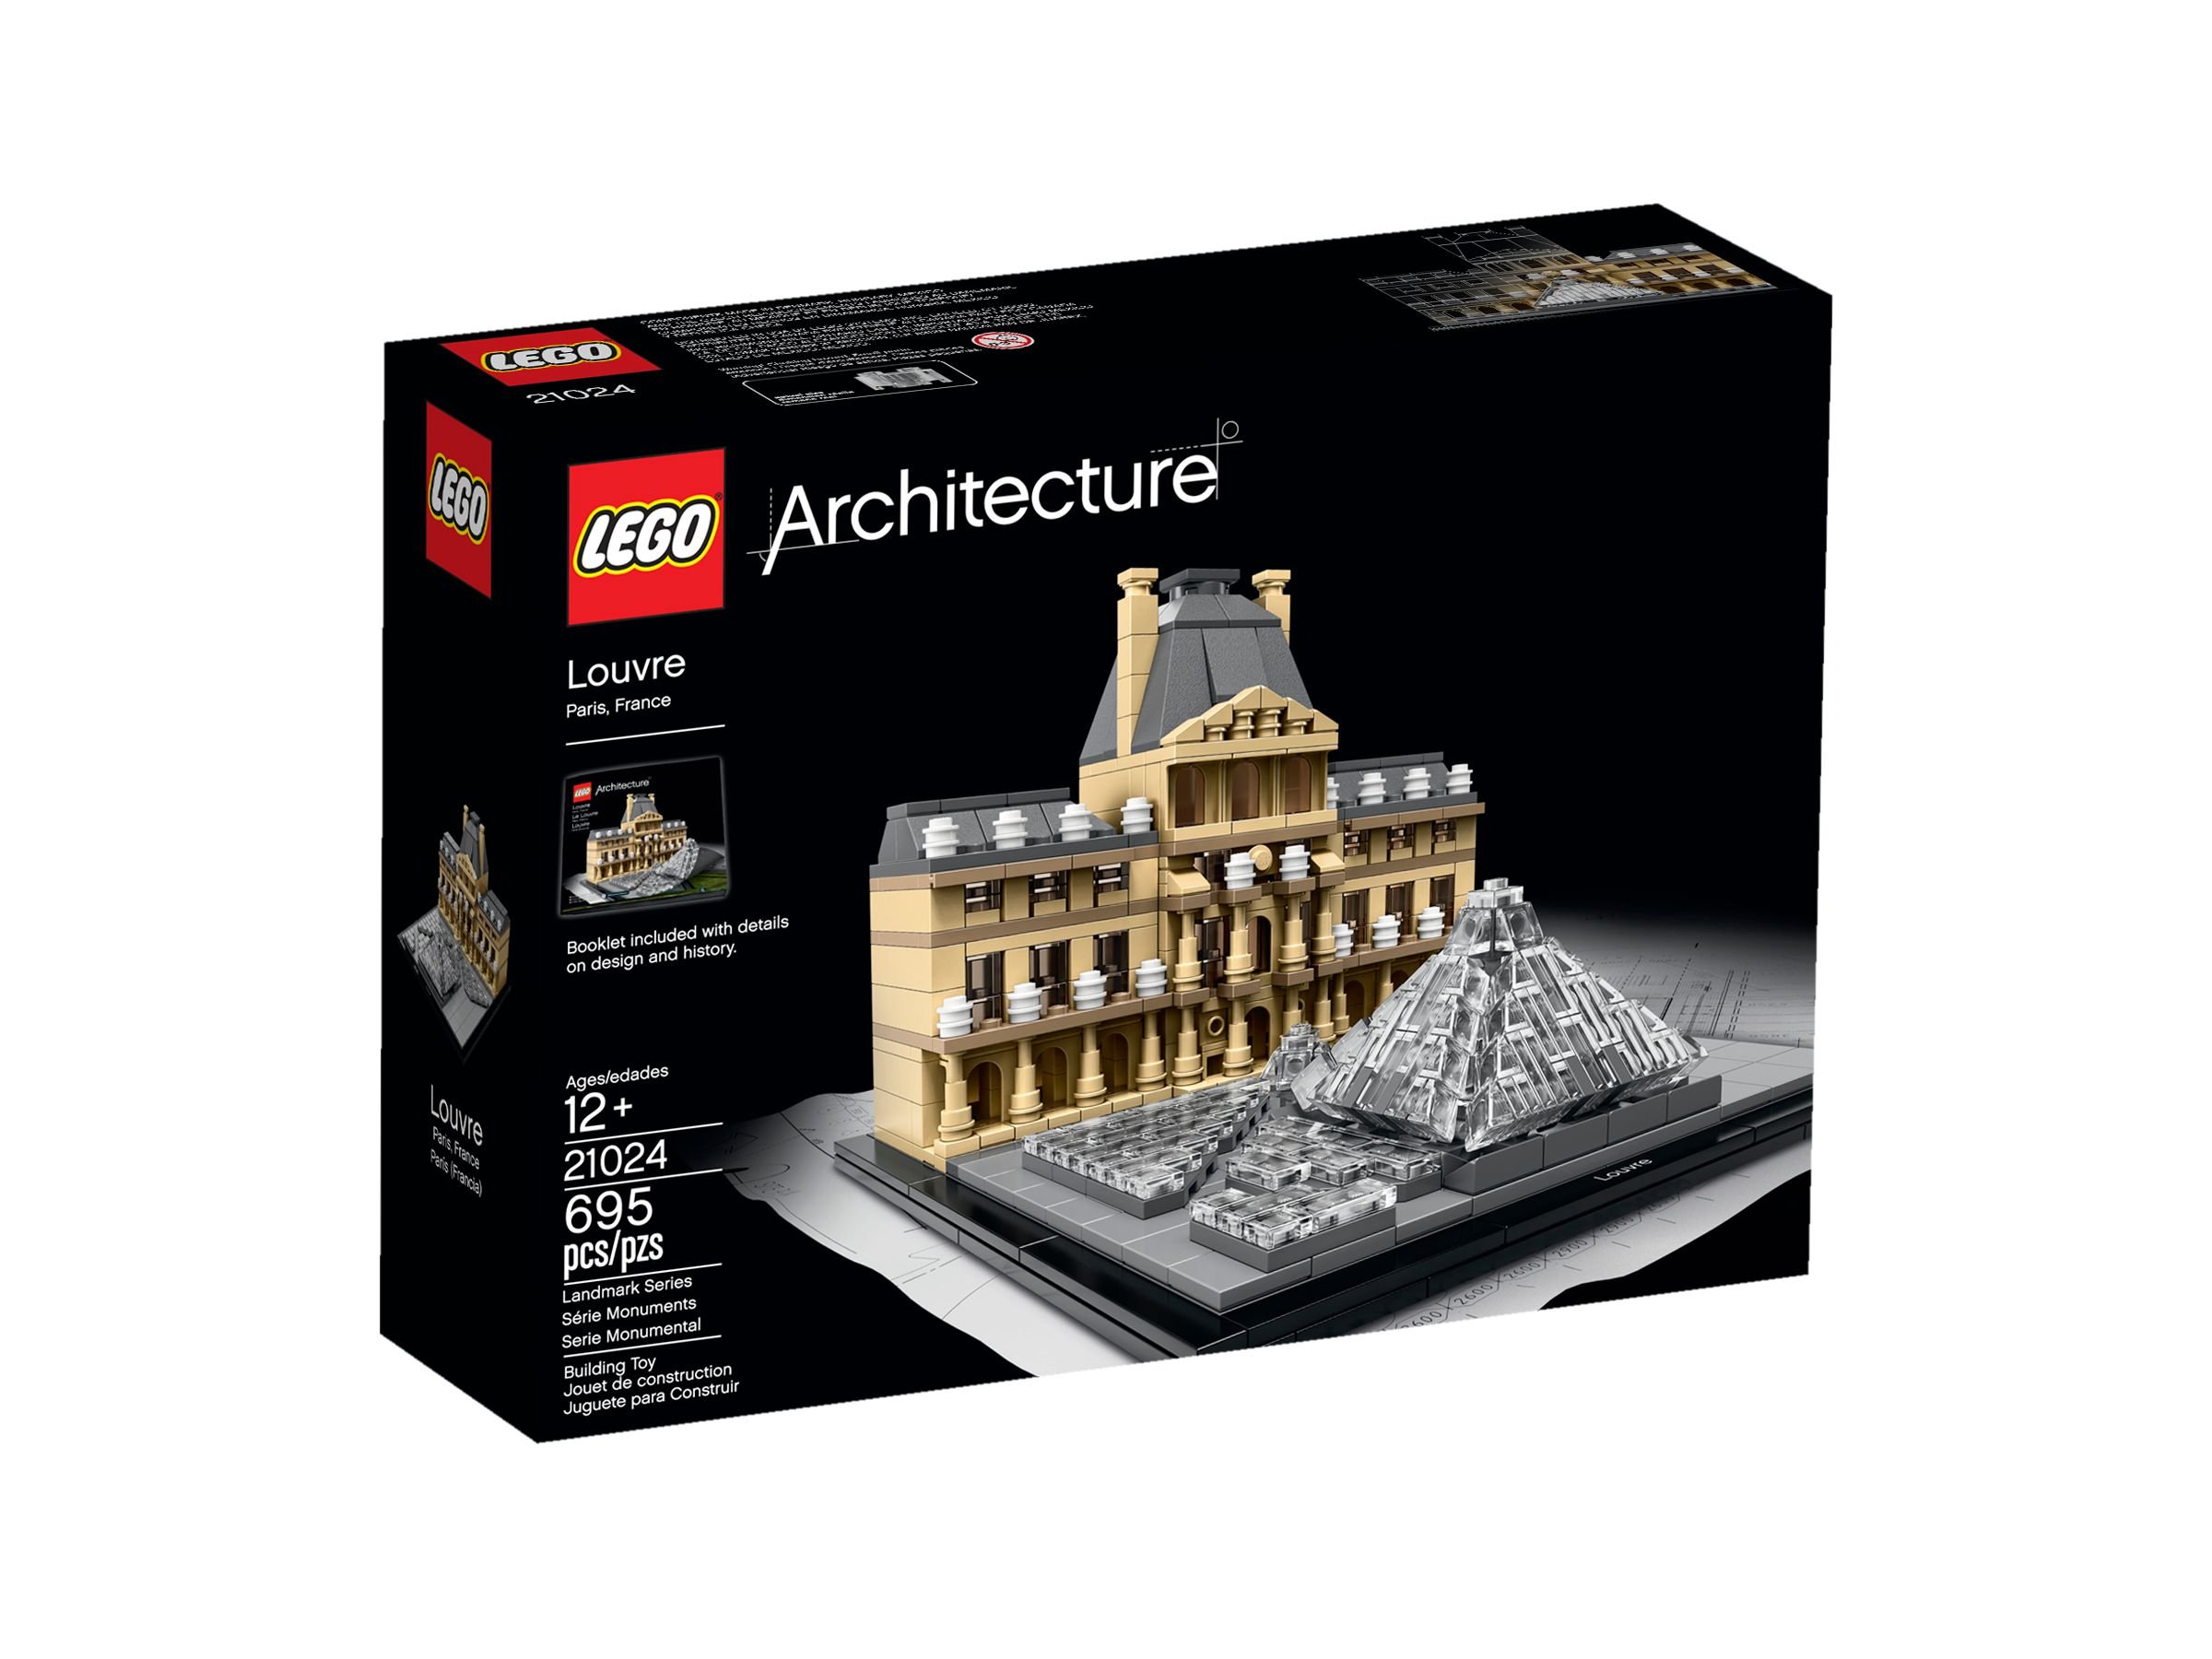 LEGO Architecture 21024 Louvre LEGO_21024_alt1.jpg